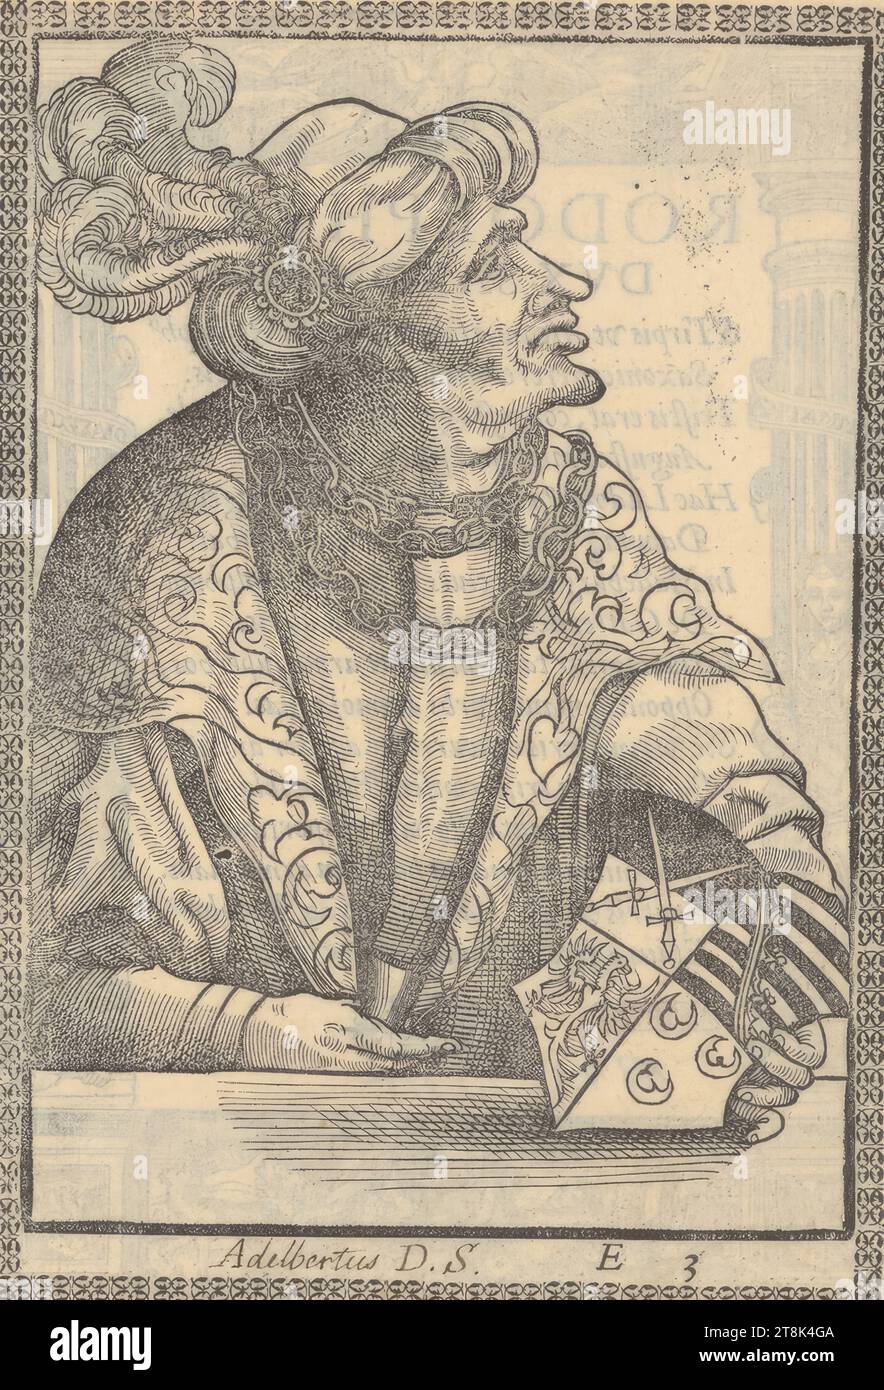 Portrait of Adelbert, Duke of Saxony, Illvstrissimo Principi AC Domino, Domino, Avgvsto, DVCI Saxoniae Electori, Sacri Romani Imperii Archimarschallo, Landgrauio Thuringiæ, Marchioni Misniae, Burggrauio Magedggersi, Domini Suo Clementissimo, S.D Prince, Lucas Cranach D . J., Wittenberg 1515 - 1586 Weimar, 1563, print, woodcut, sheet: 18.1 × 12.5 cm, M.u. 'Adelbertus D.S Stock Photo